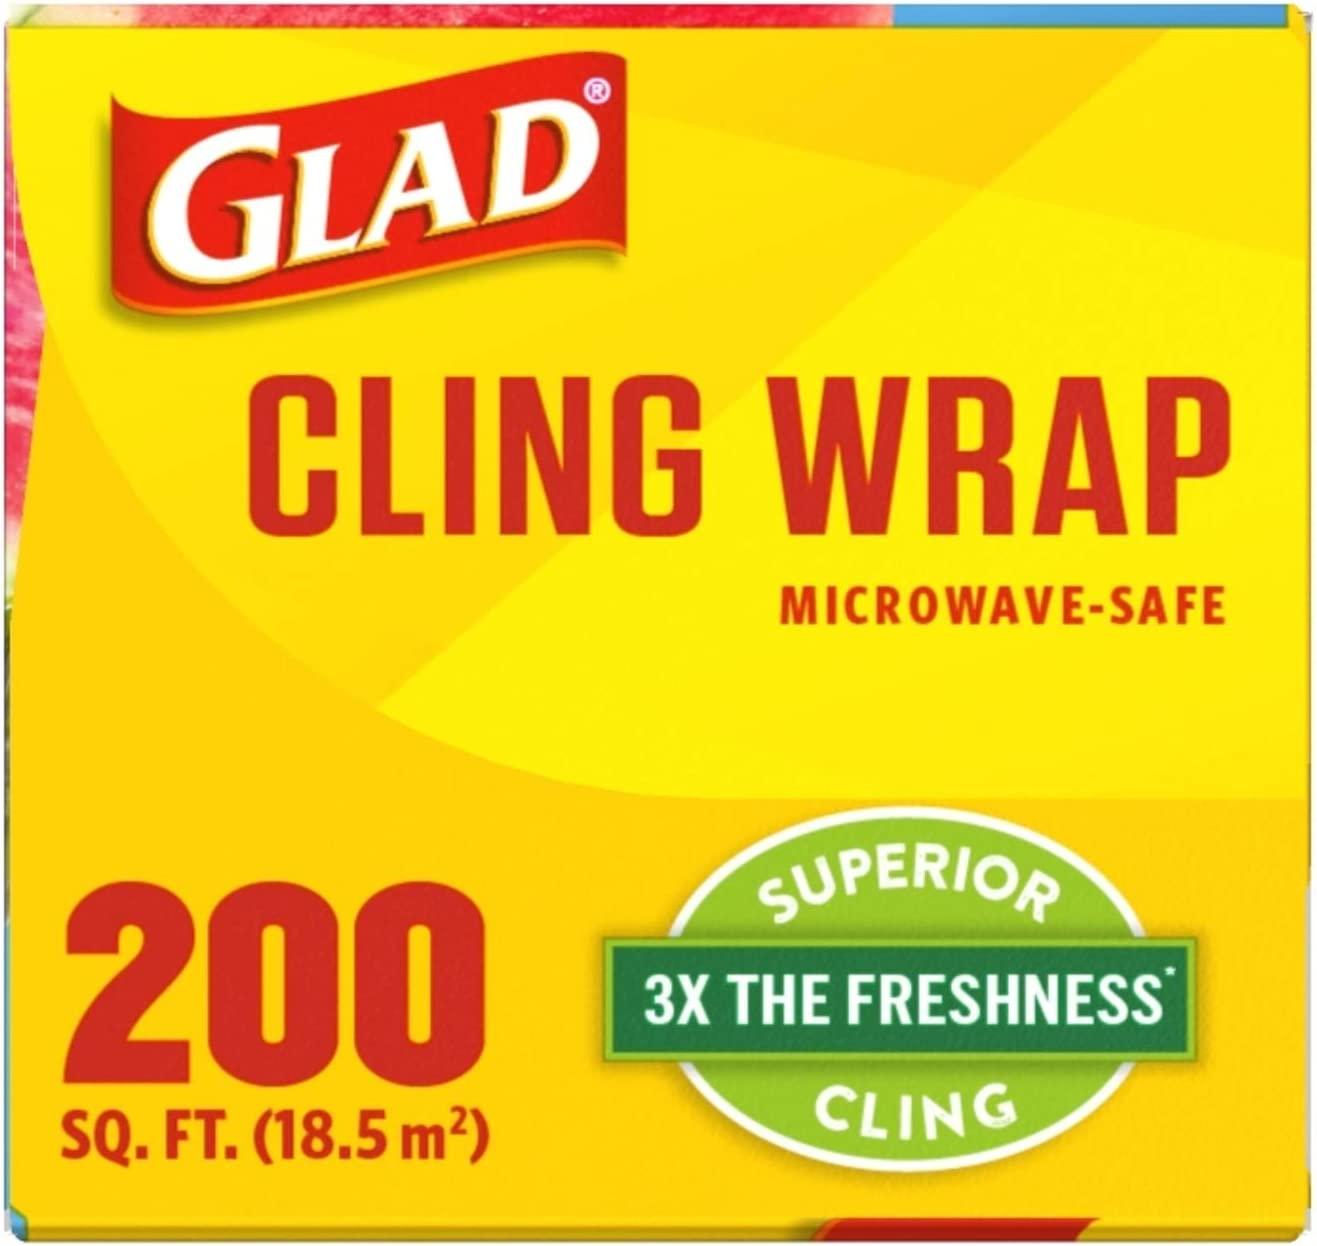 Glad, Clingwrap Plastic Wrap, 200 Square Foot Roll, Clear (CLO00020)